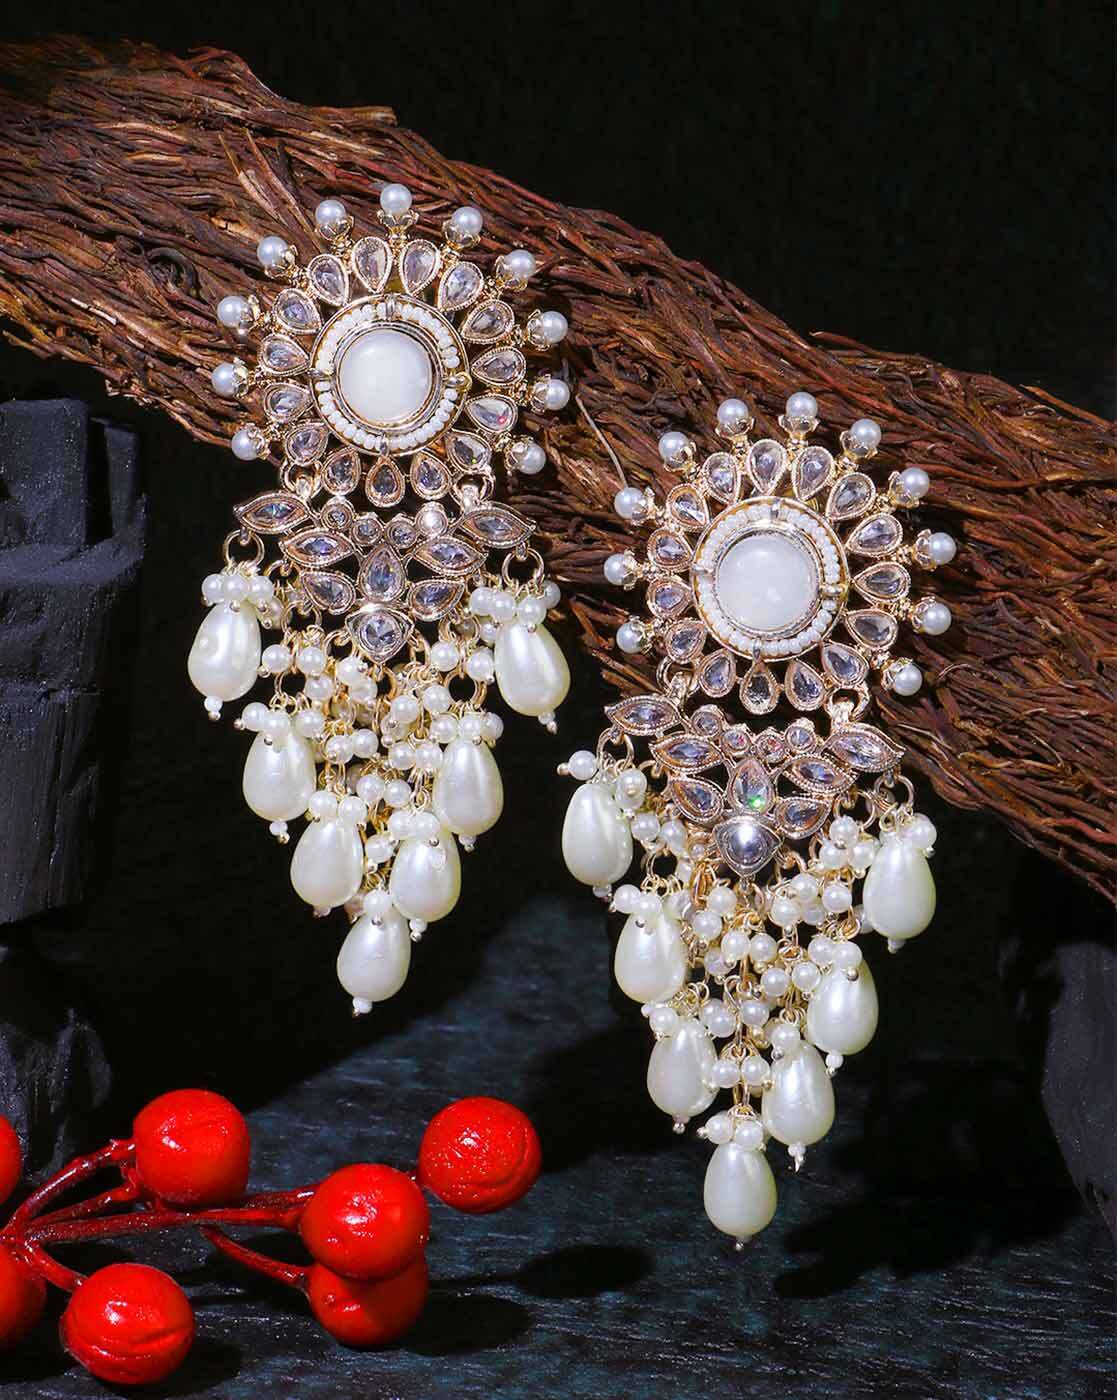 Buy Gold-Toned Earrings for Women by Adwitiya Online | Ajio.com